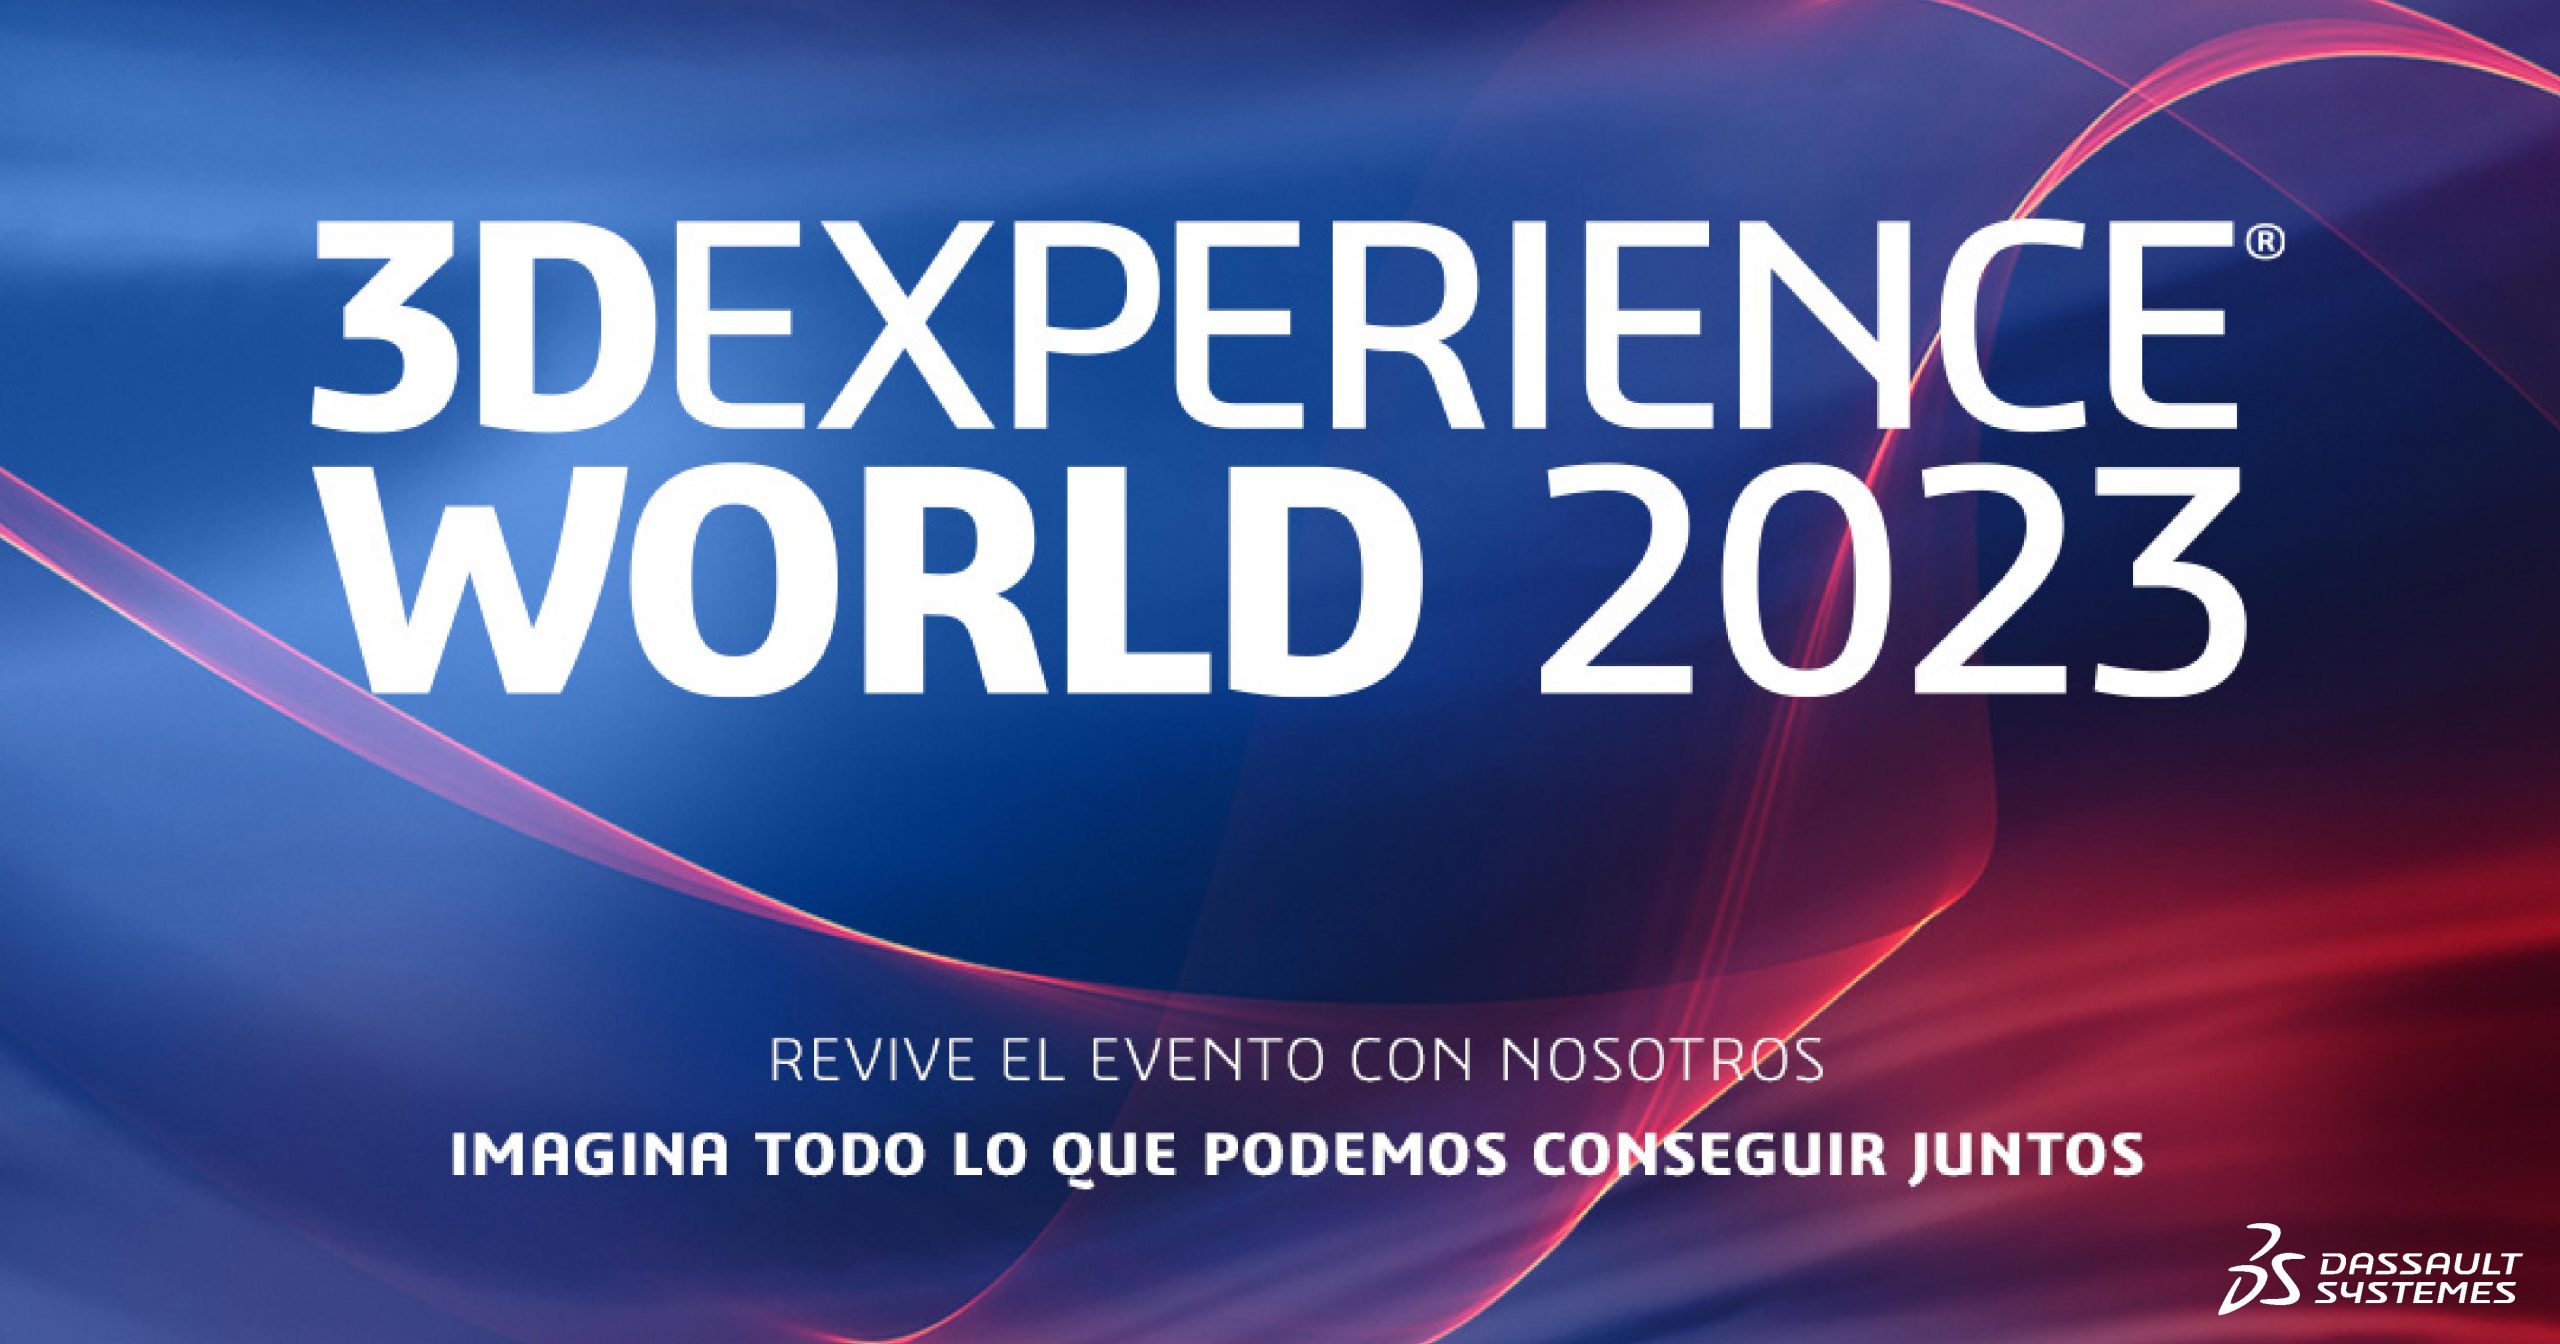 3DEXPERIENCE WORLD 2023